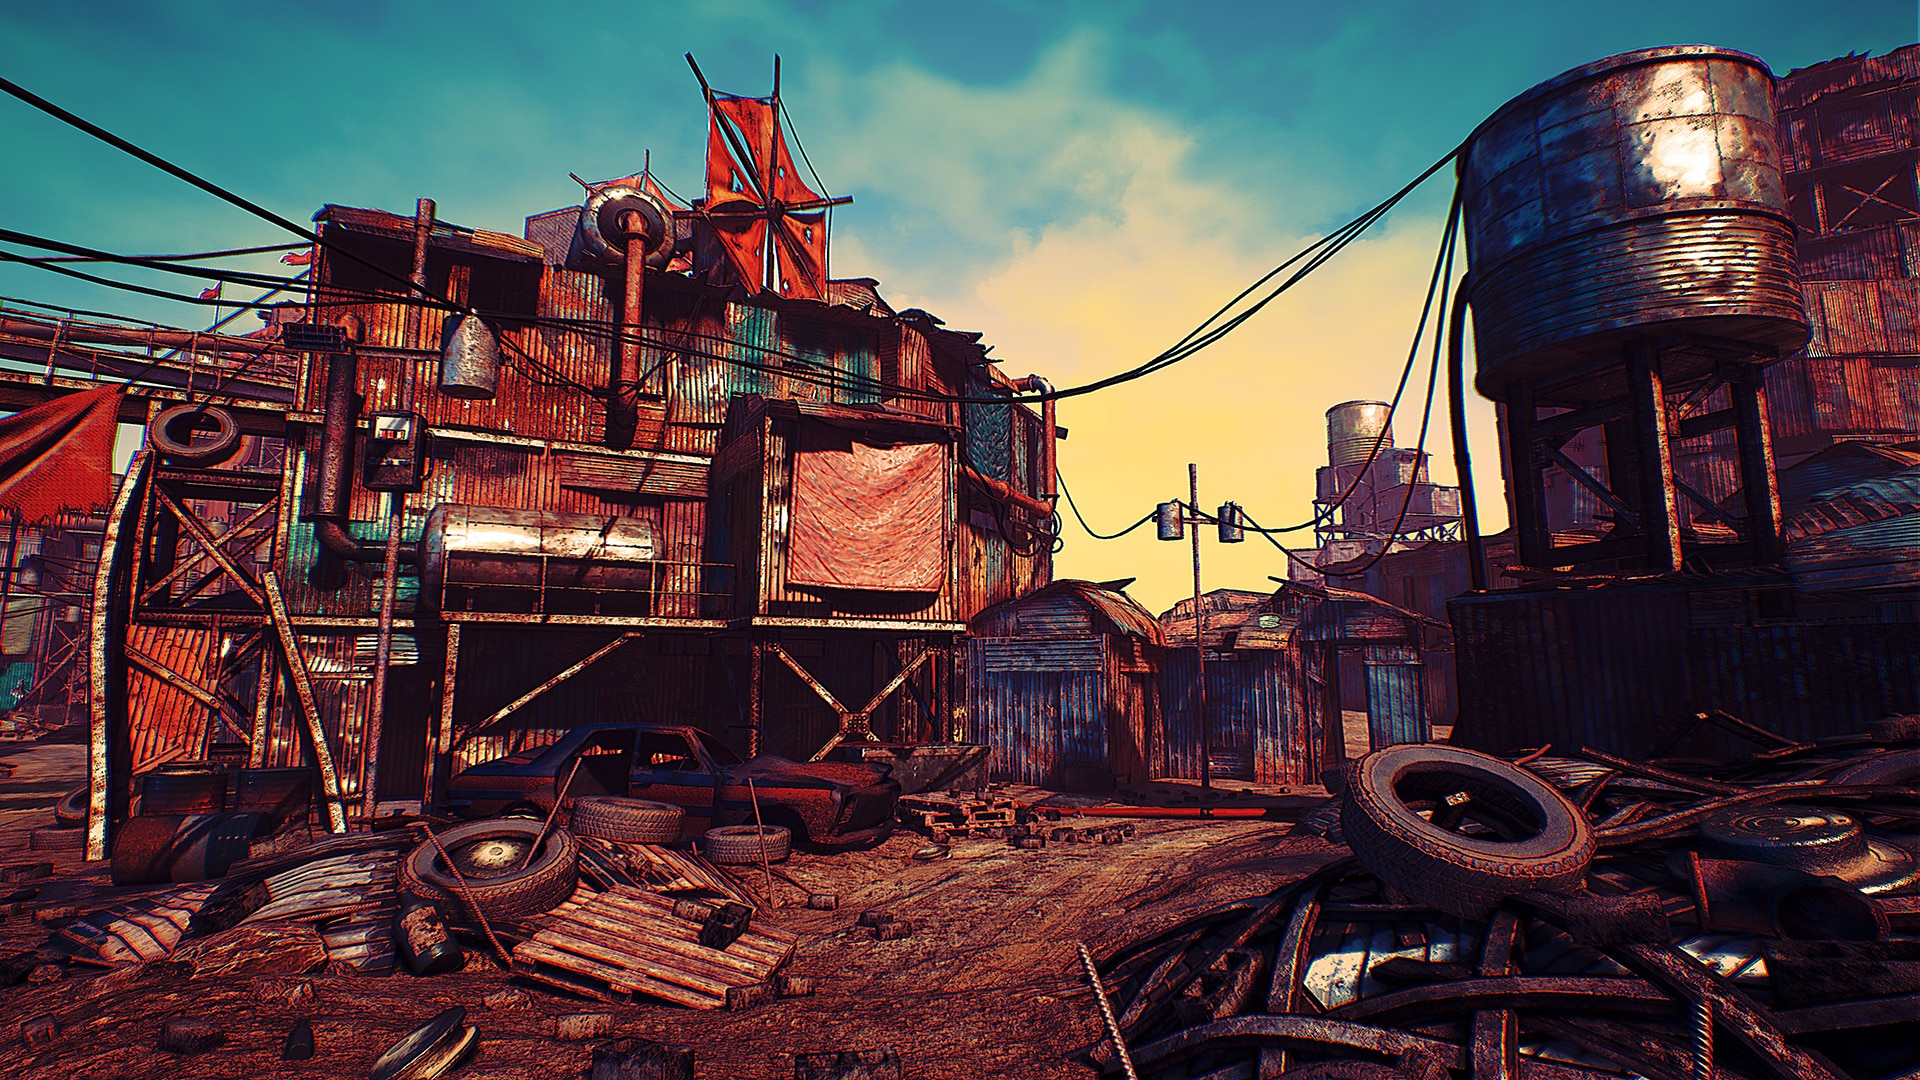 Unreal Engine – Post Apocalyptic City